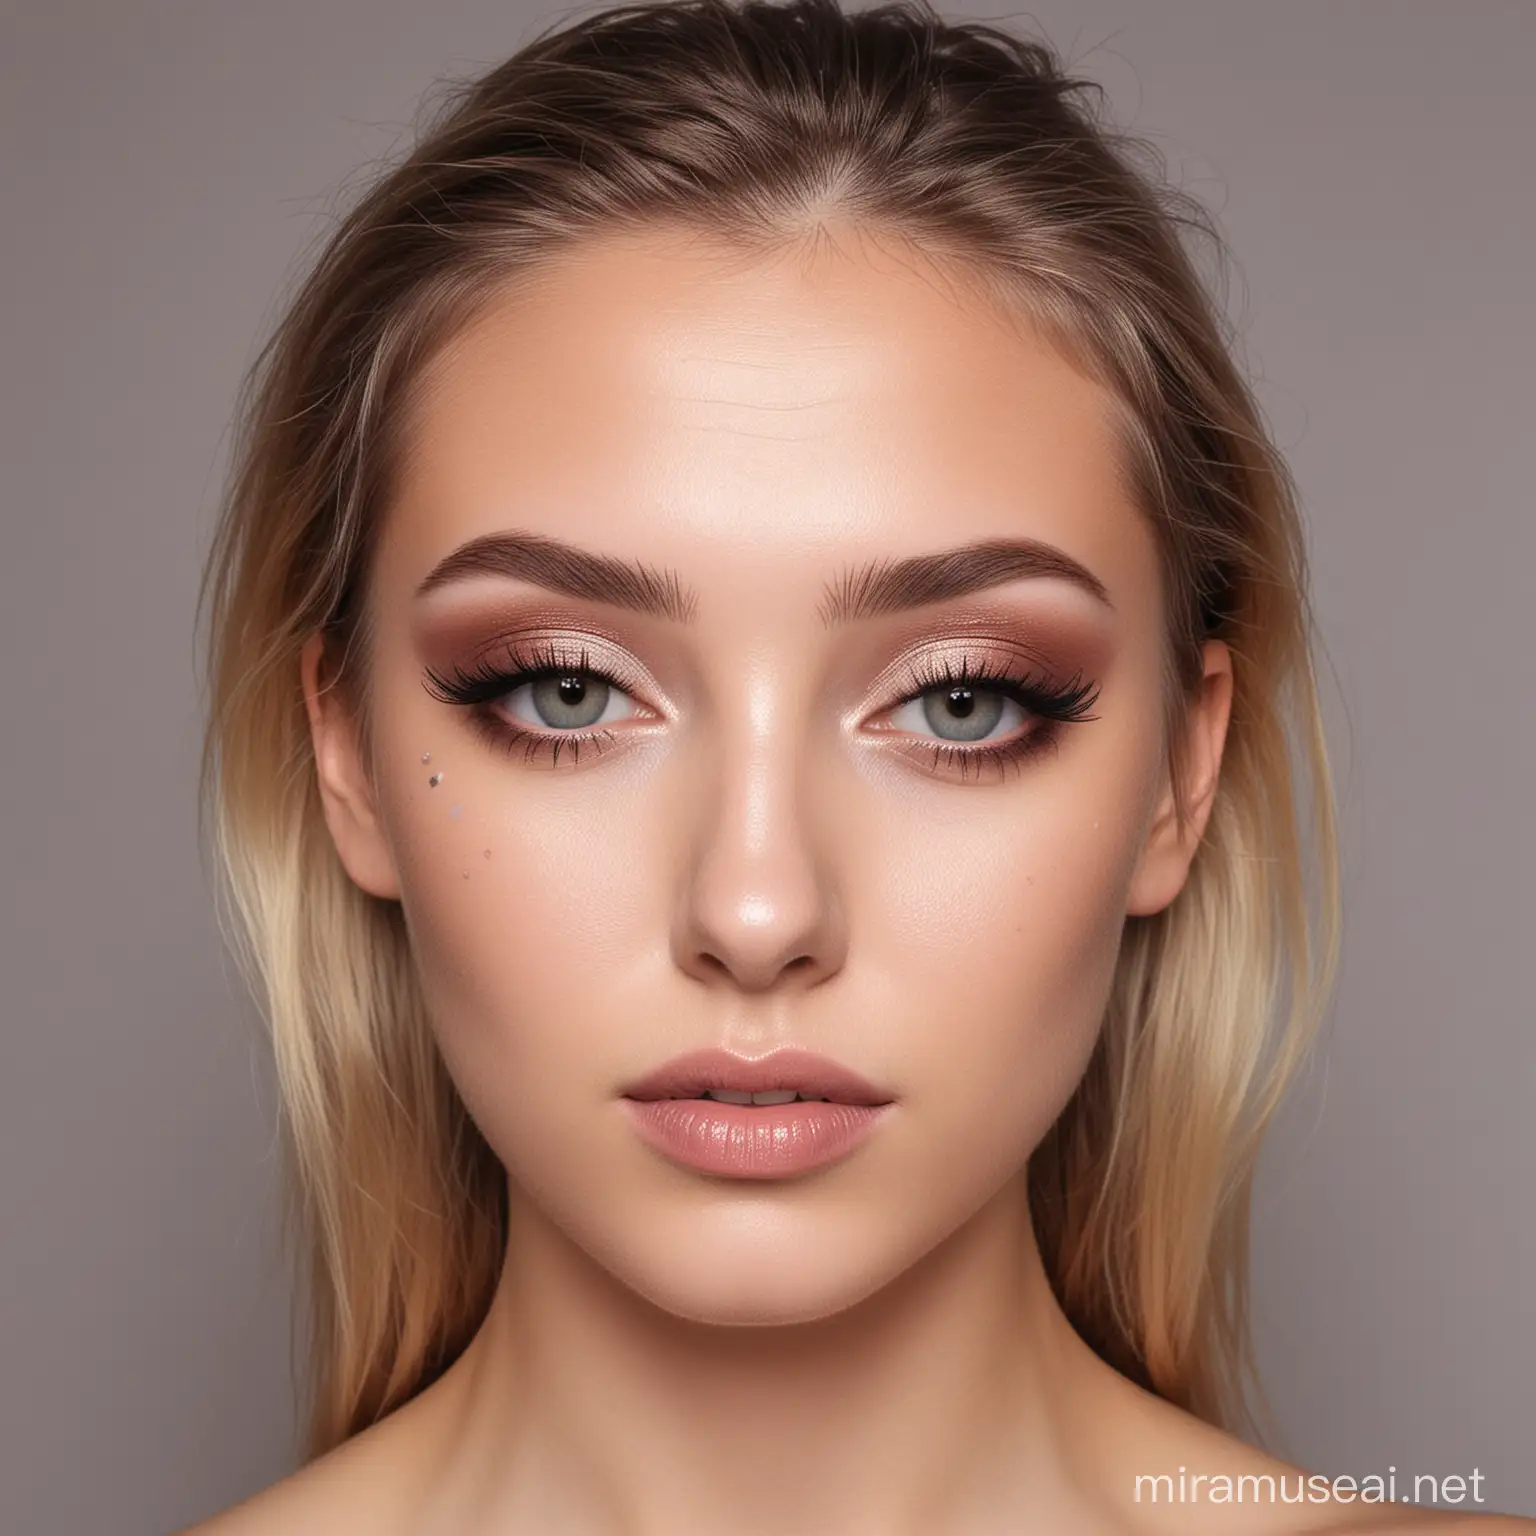 Girl Applying CrueltyFree Makeup with EcoFriendly Brushes